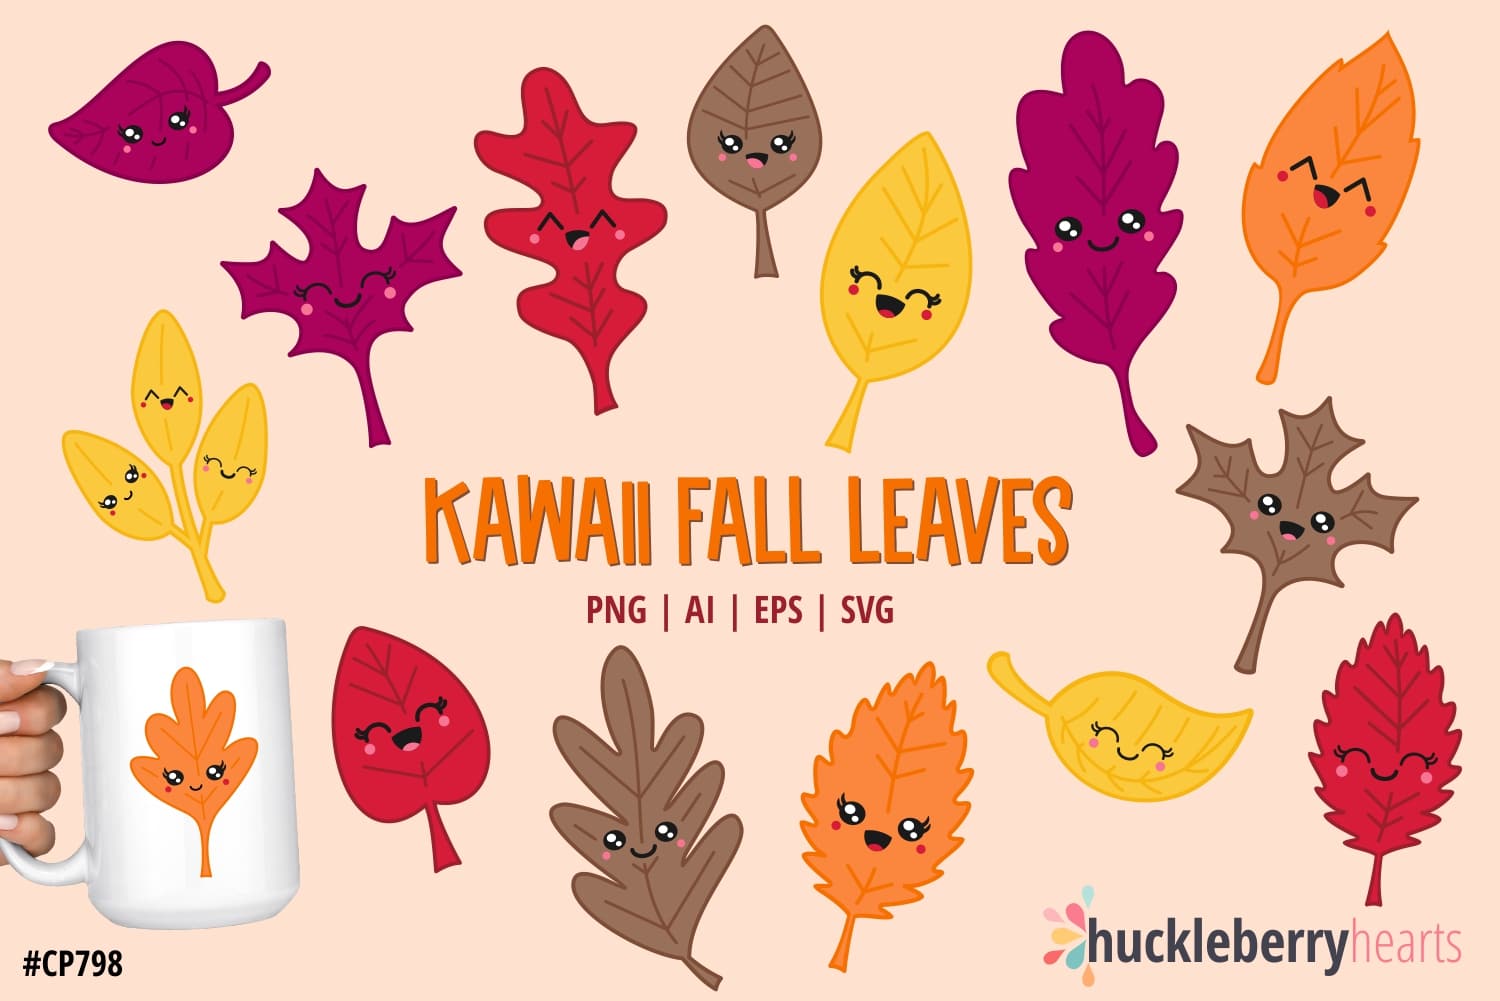 Kawaii Fall Leaves Clipart and Vector Set